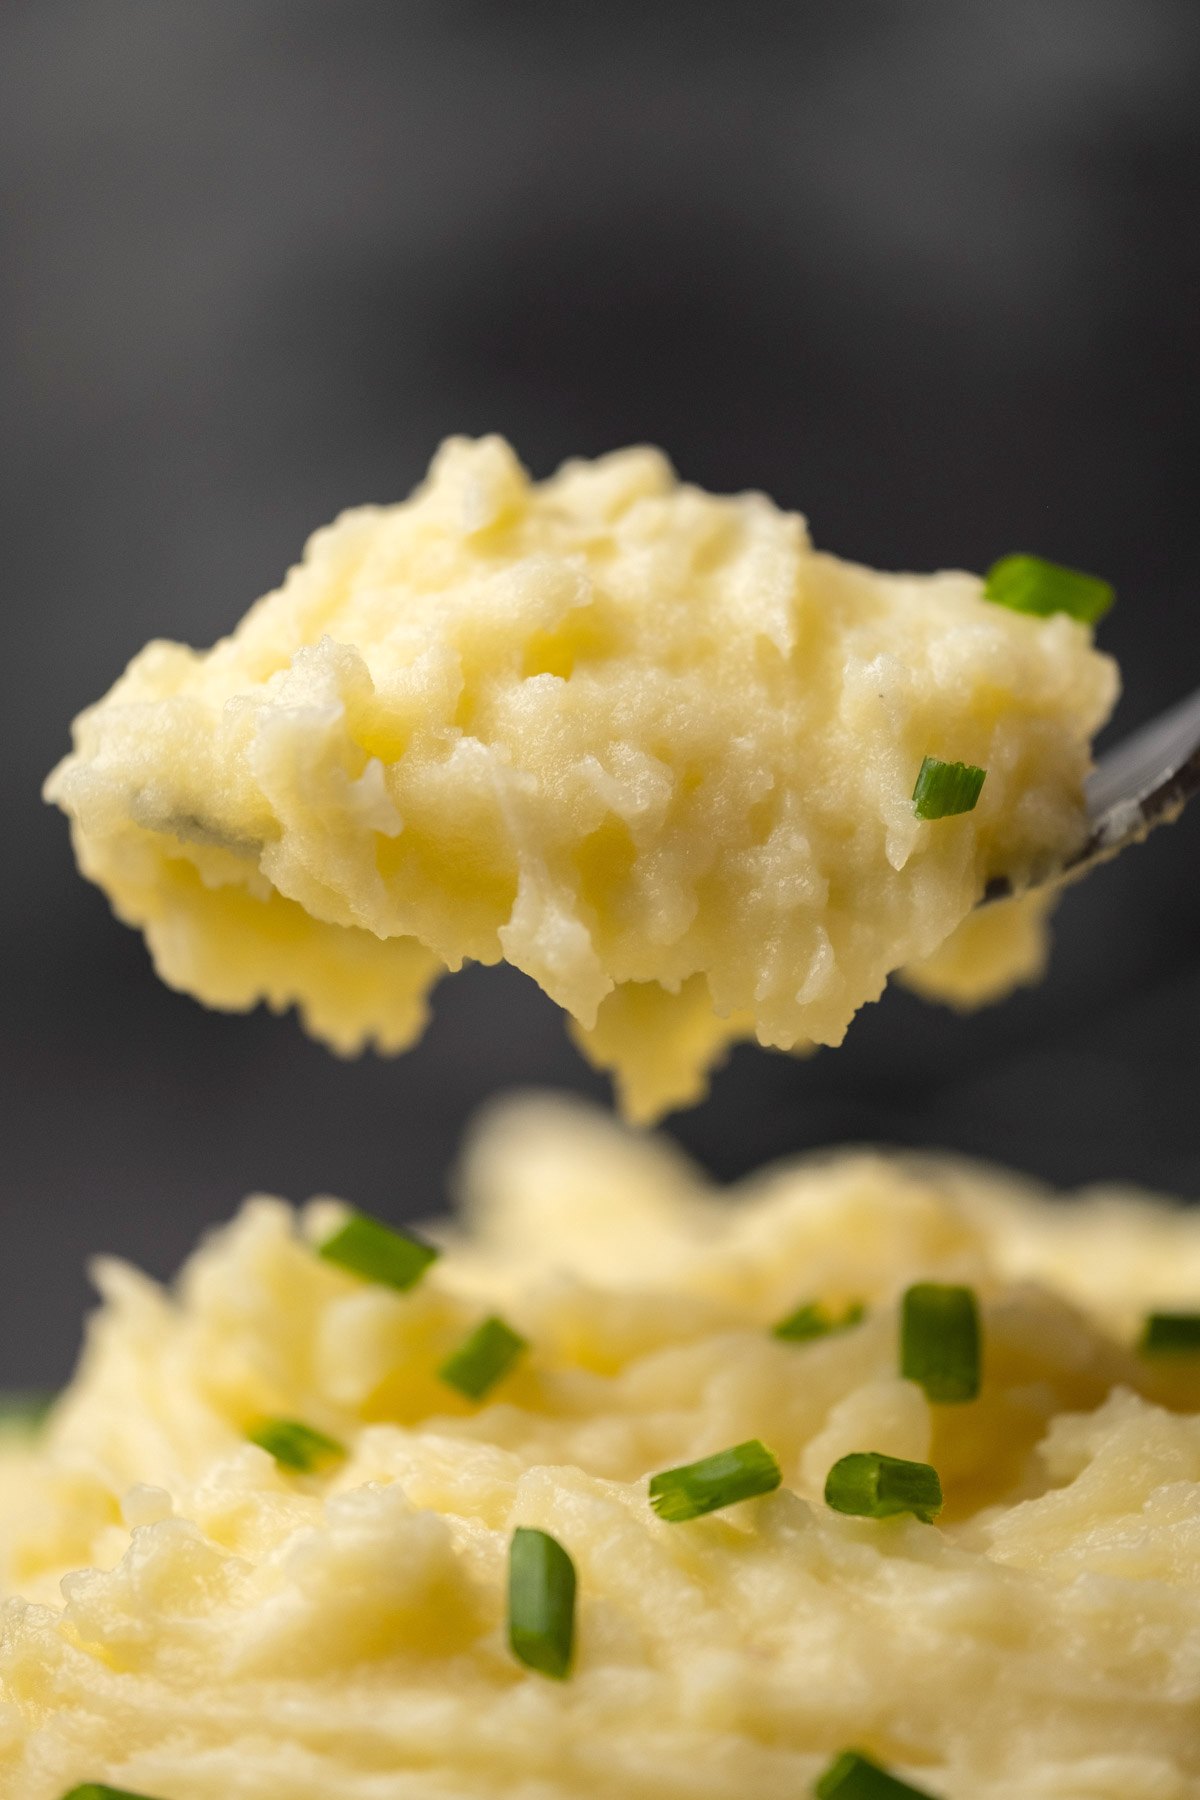 Spoonful of vegan mashed potatoes. 